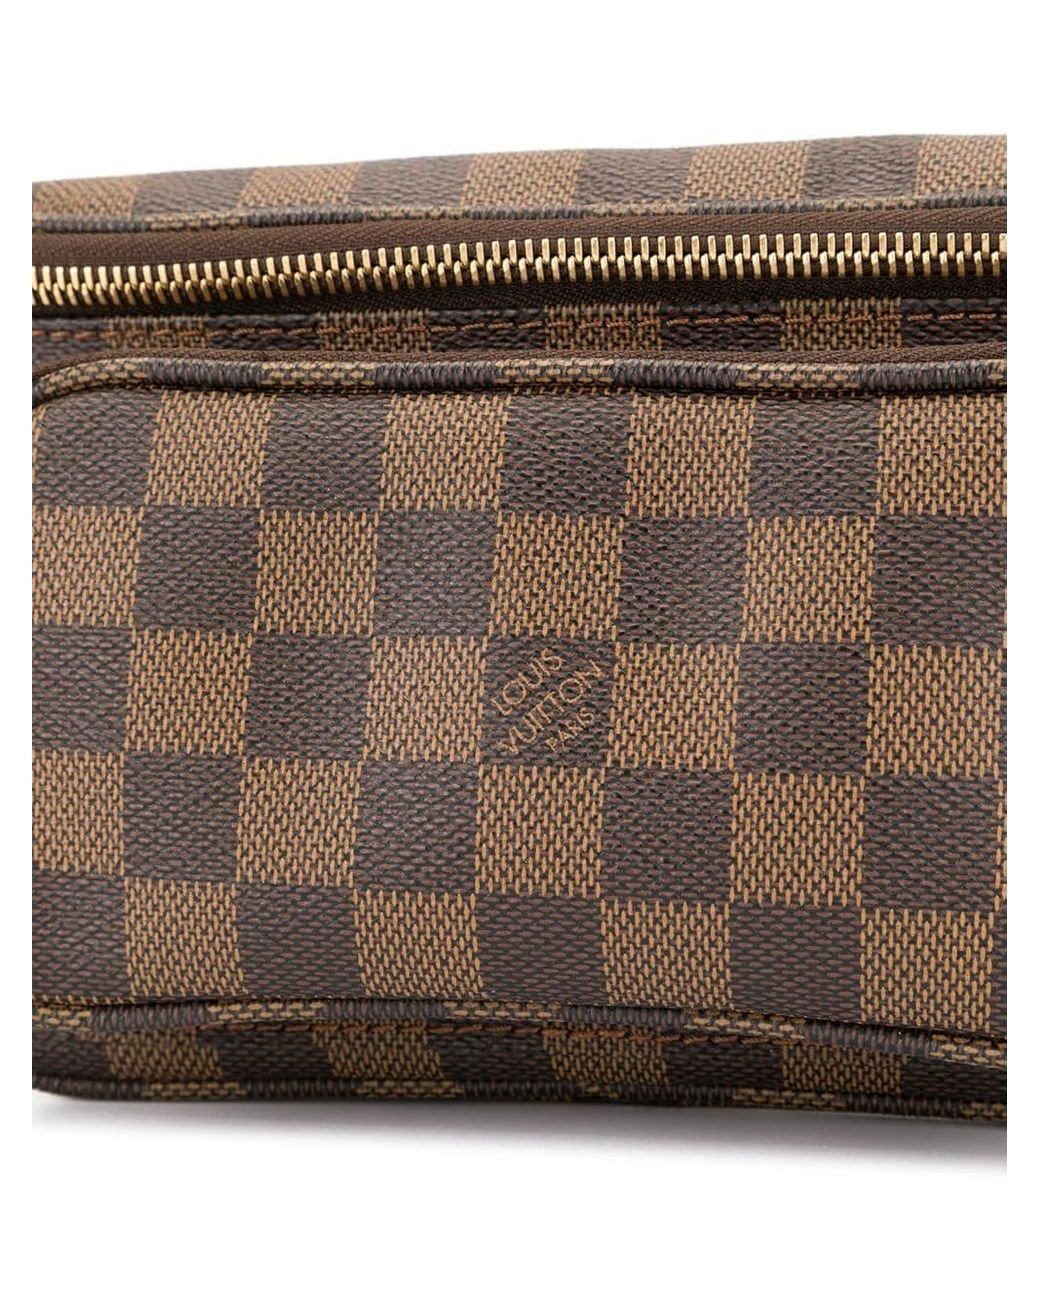 Louis Vuitton 2007 pre-owned Melville belt bag